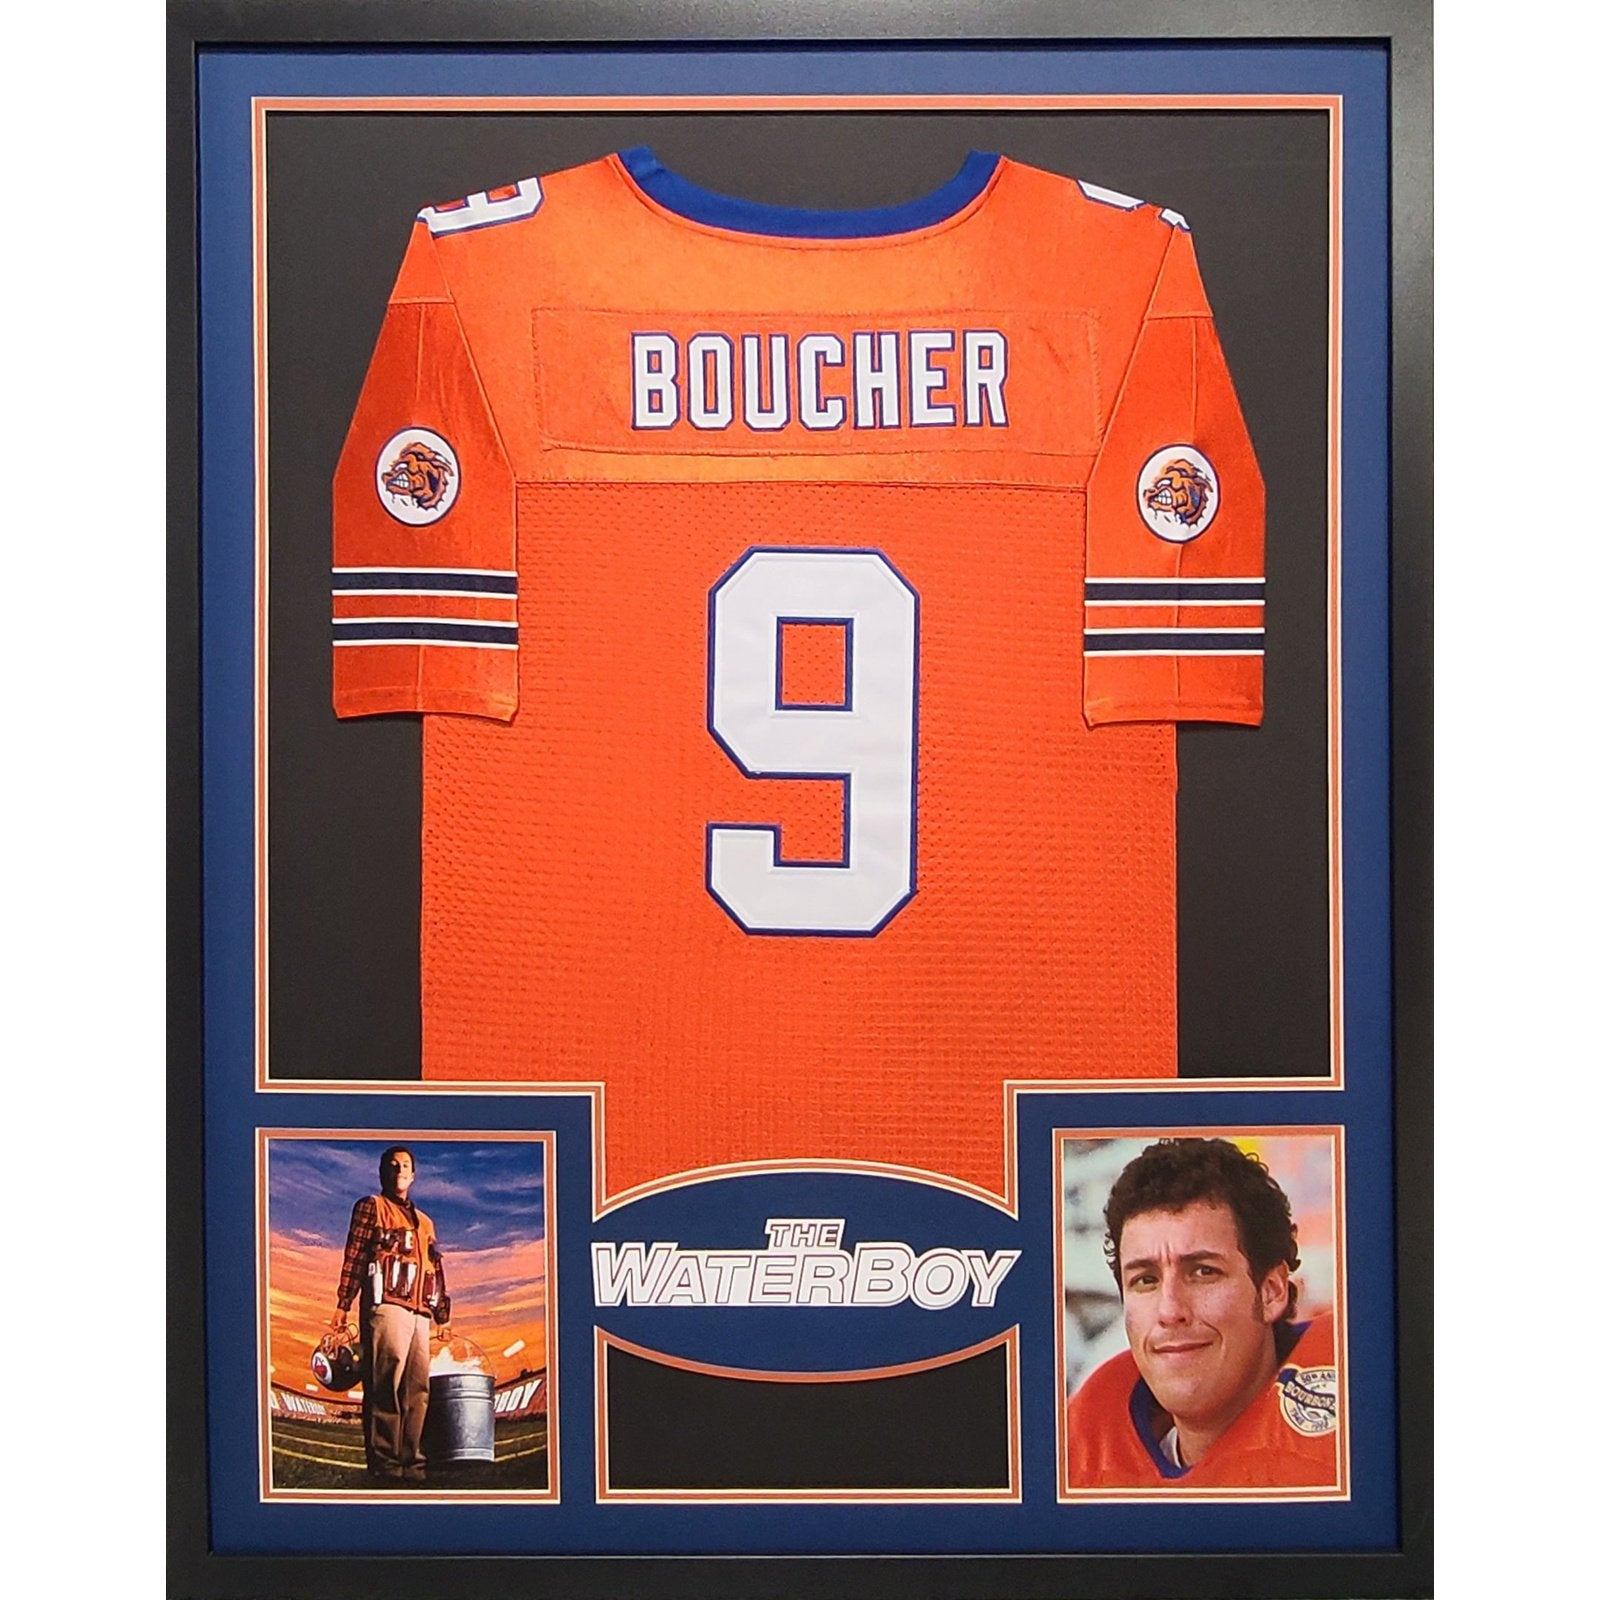 Bobby Boucher Cap for Sale by murrayjena09